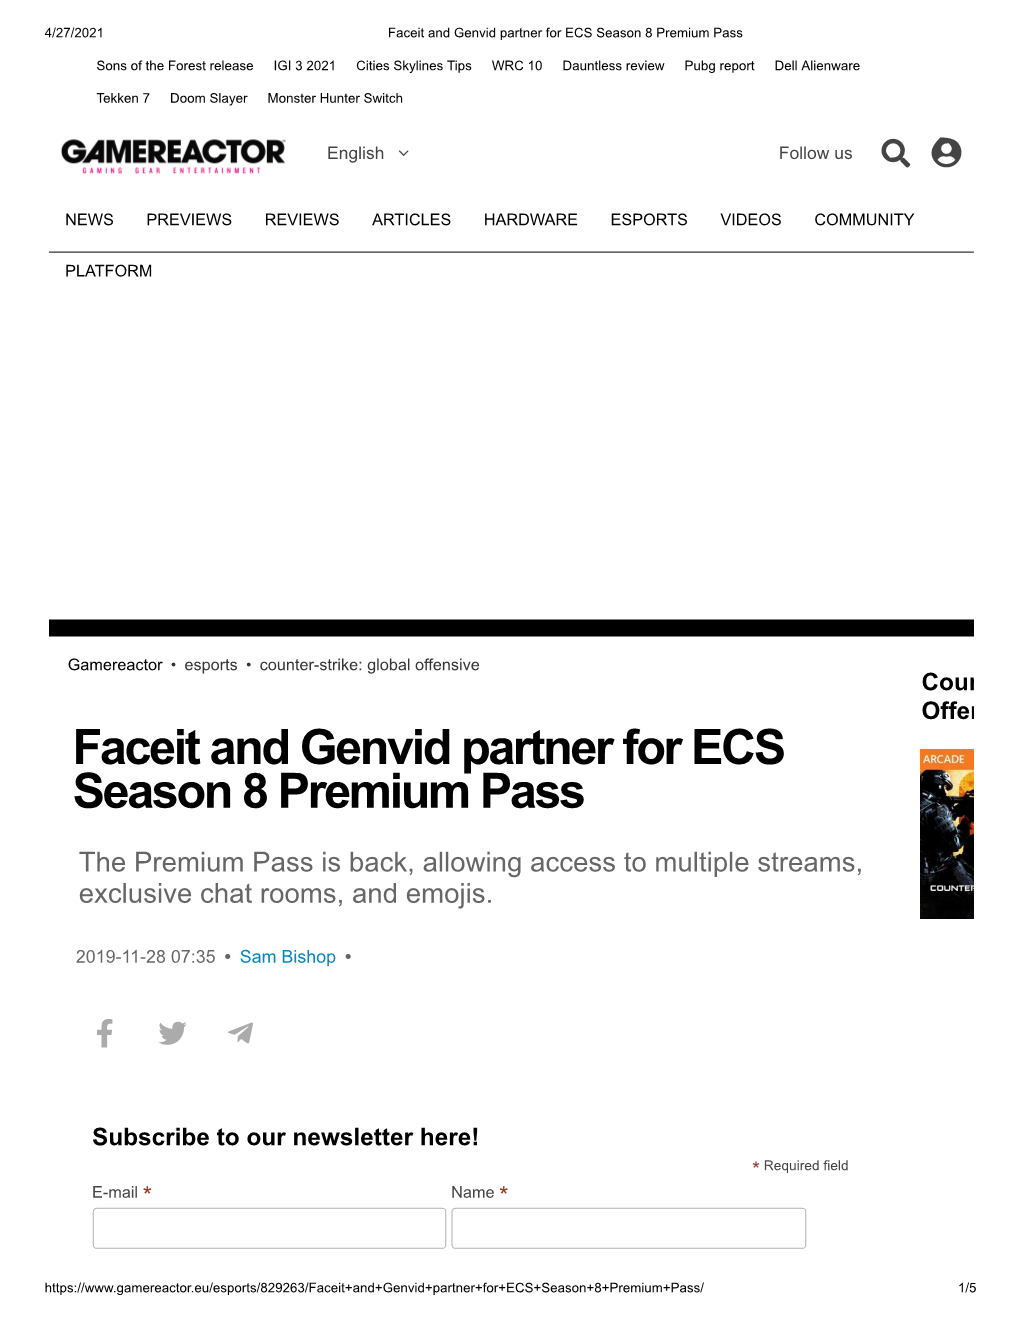 Faceit and Genvid Partner for ECS Season 8 Premium Pass